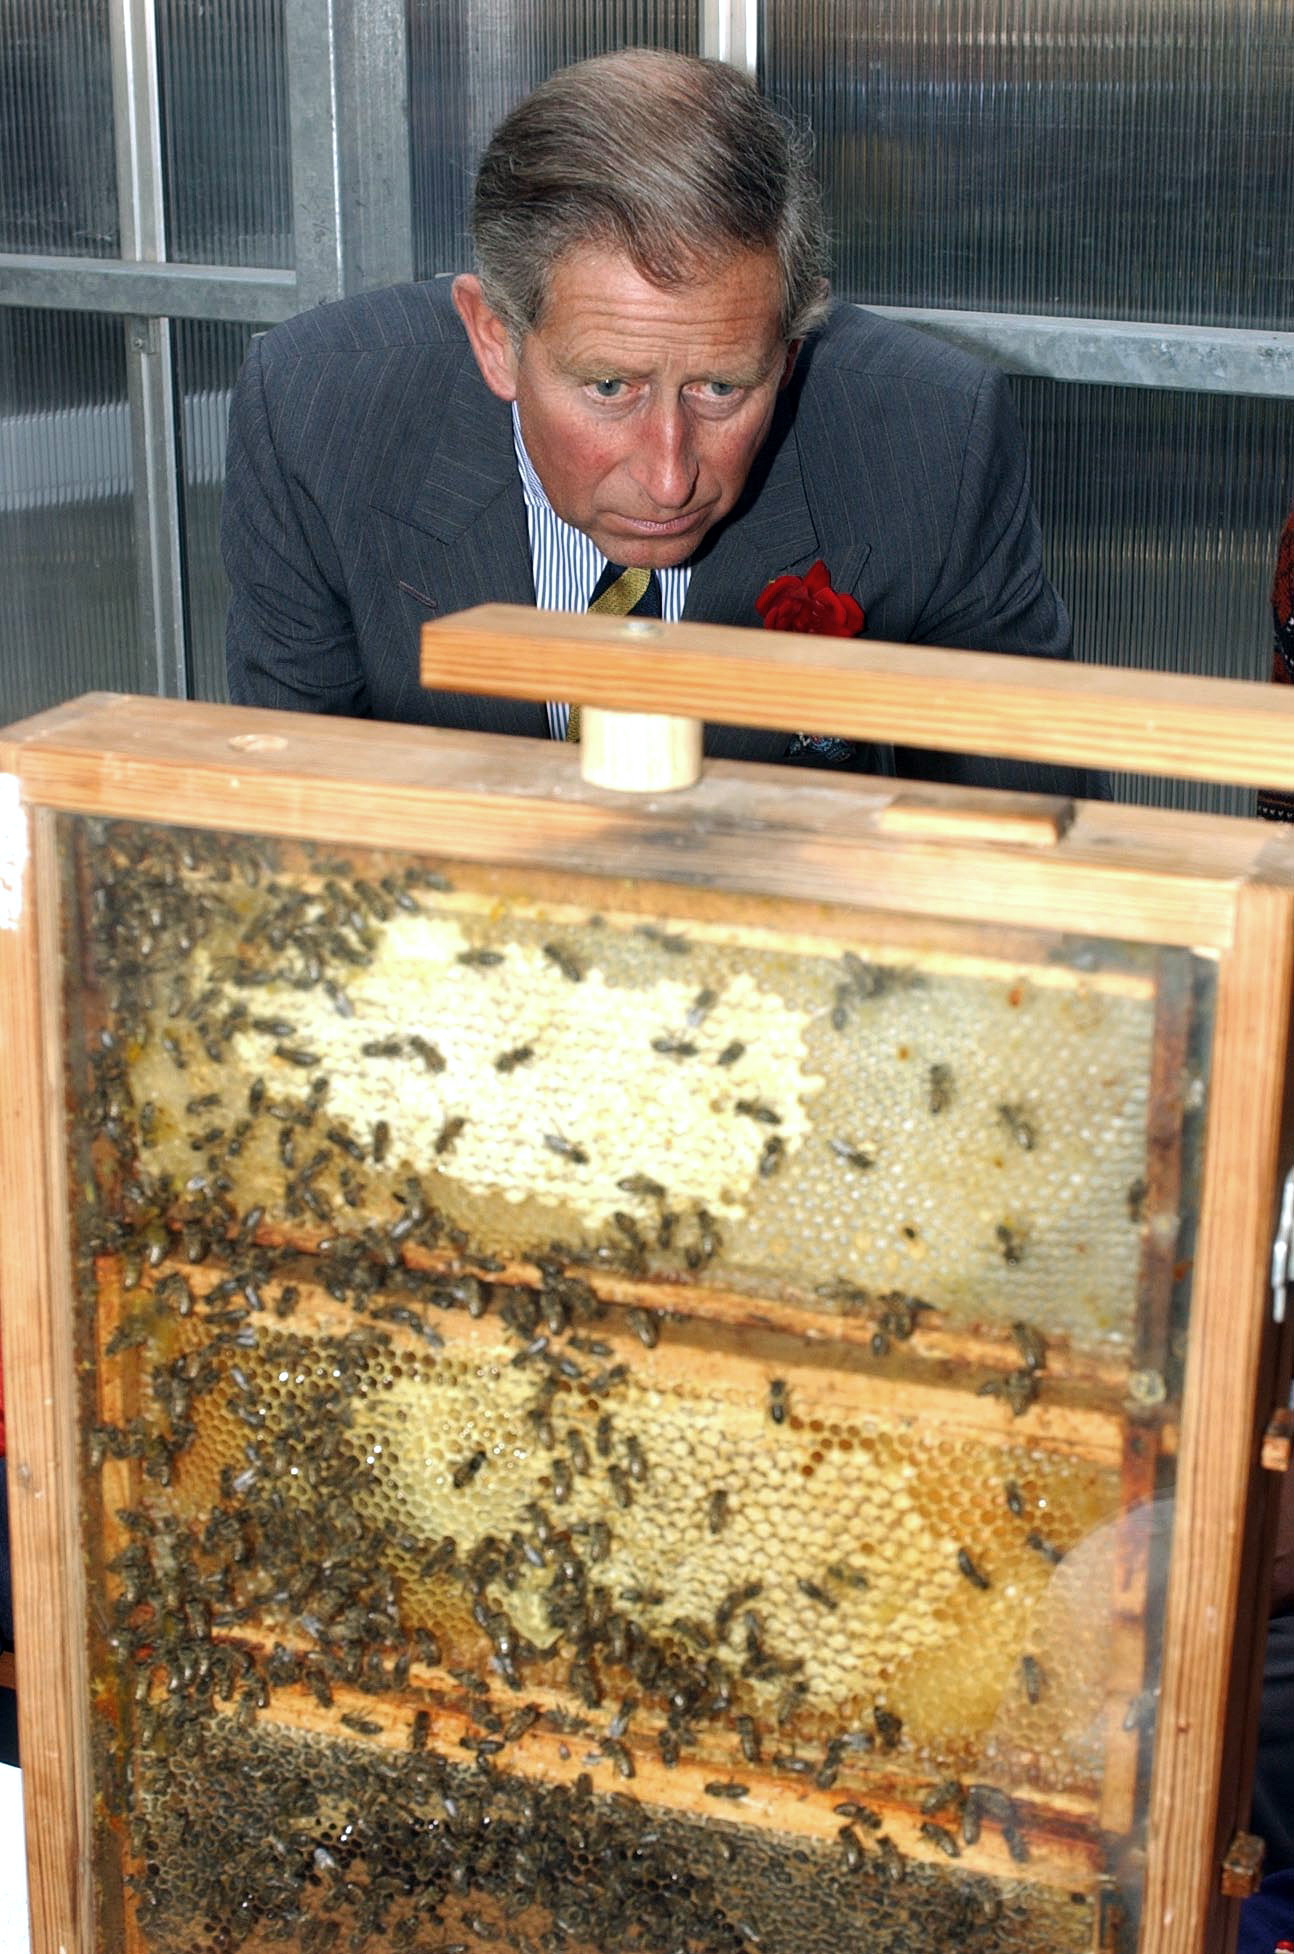 Prince Charles, bees